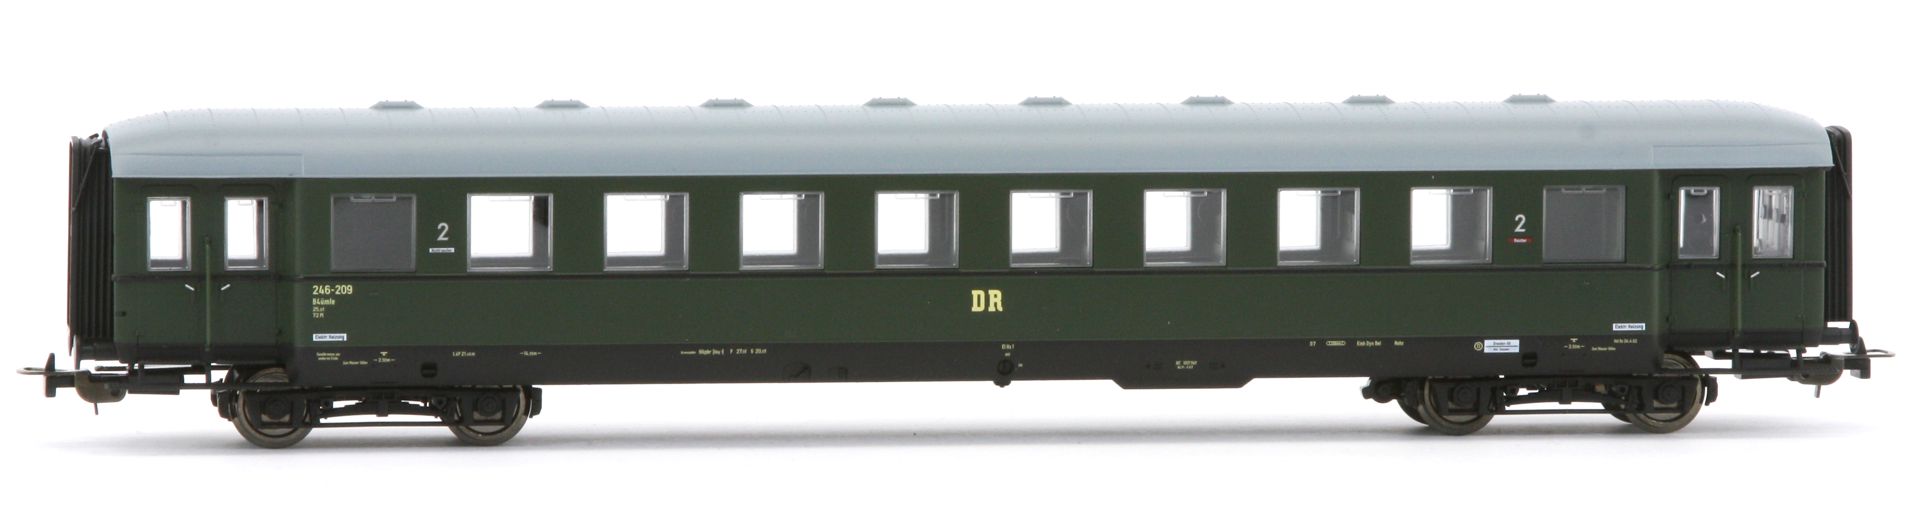 Piko 53273-3 - Personenwagen 2. Klasse B4ümle, DR, Ep.III